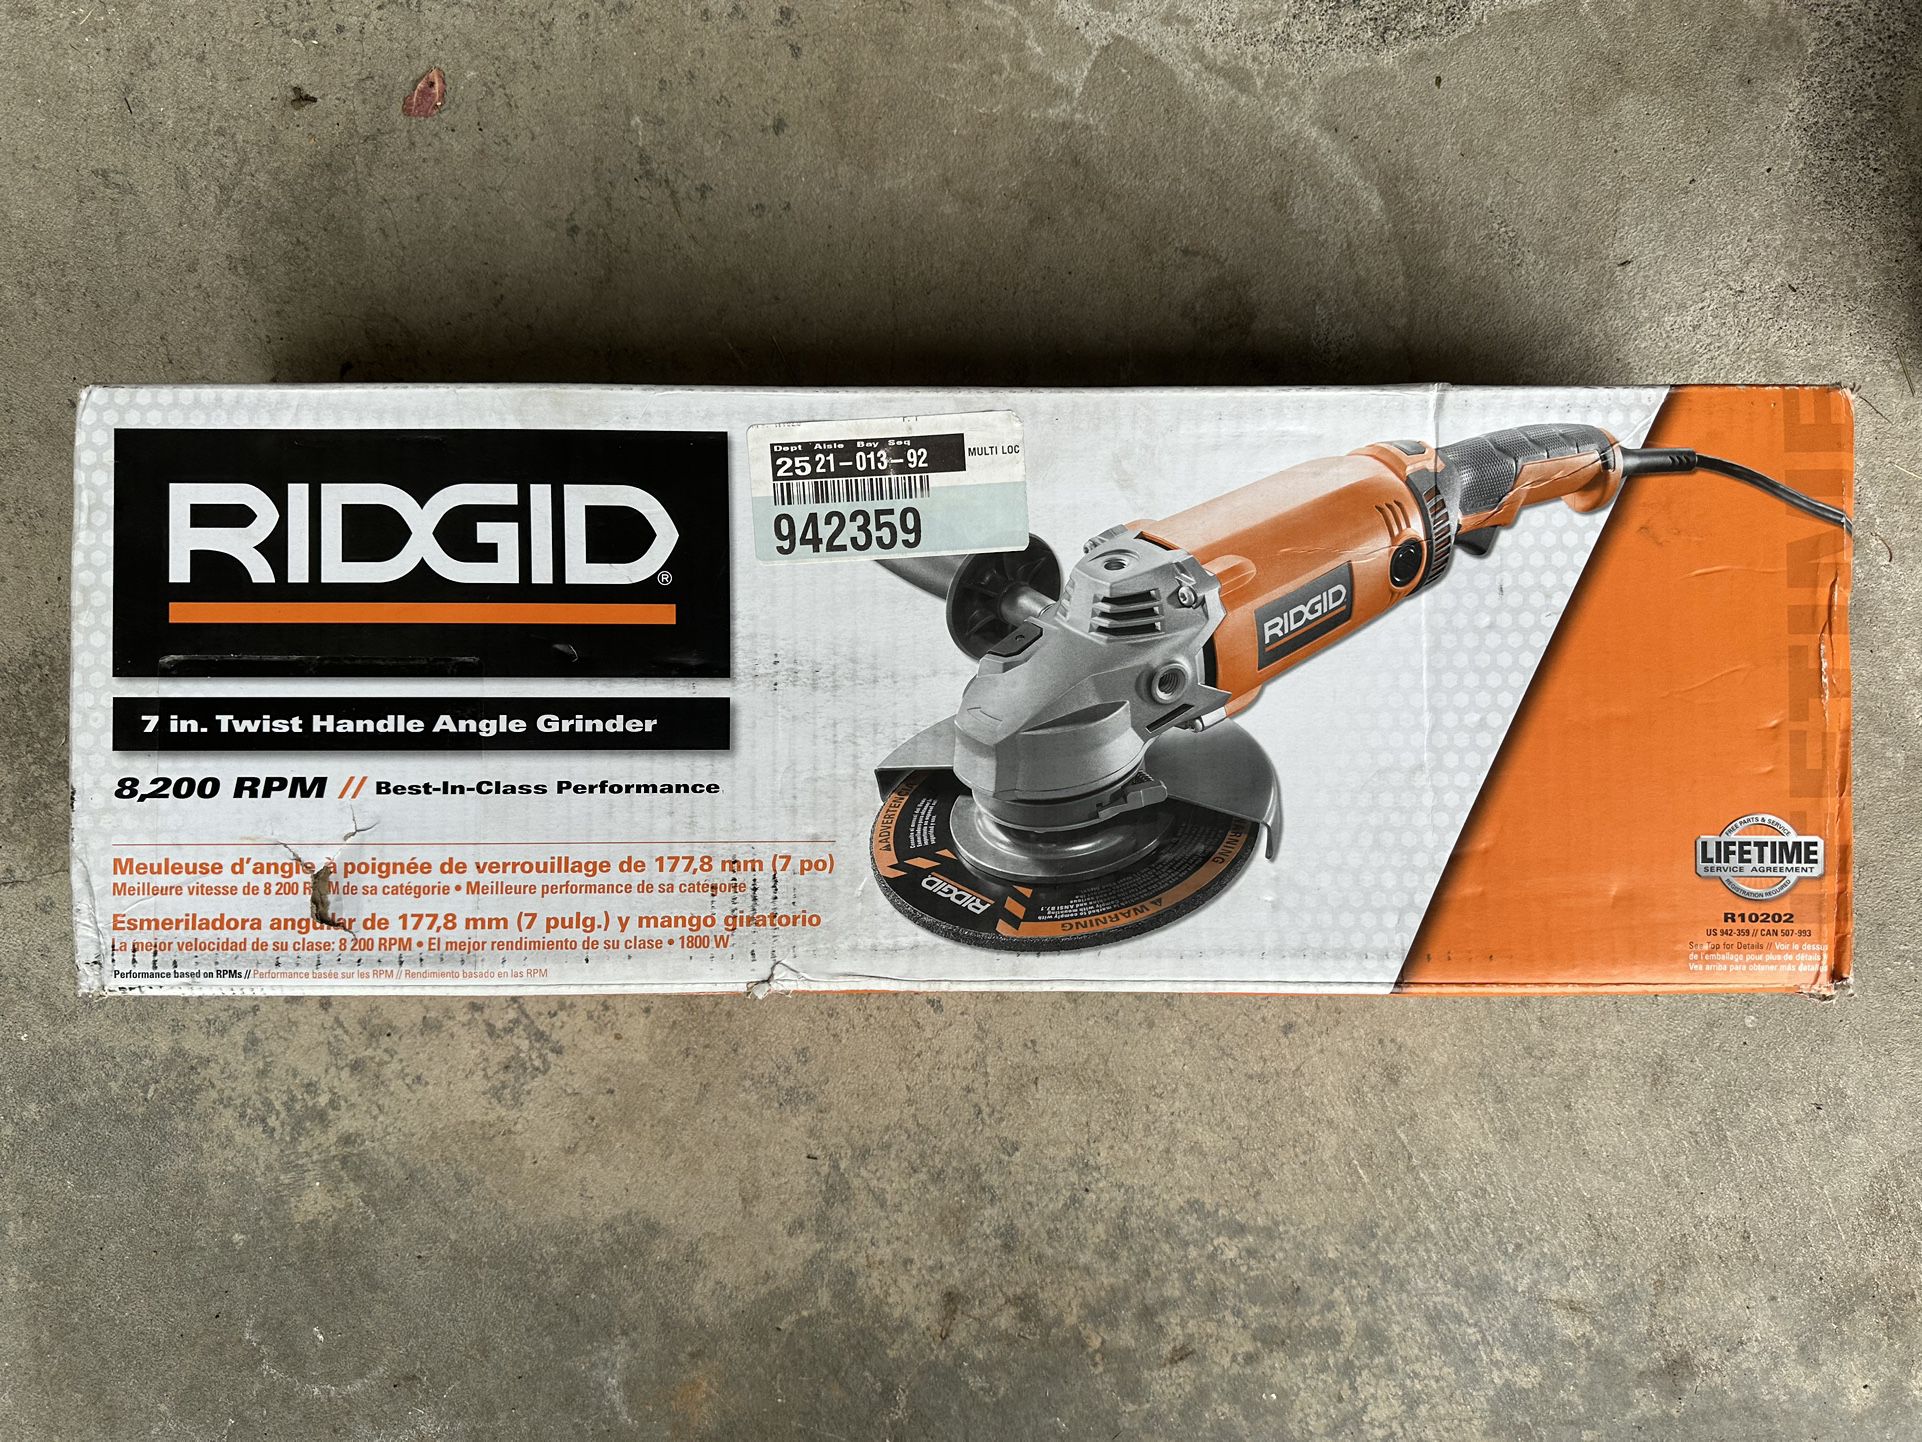 Rigid Brand Tool FS